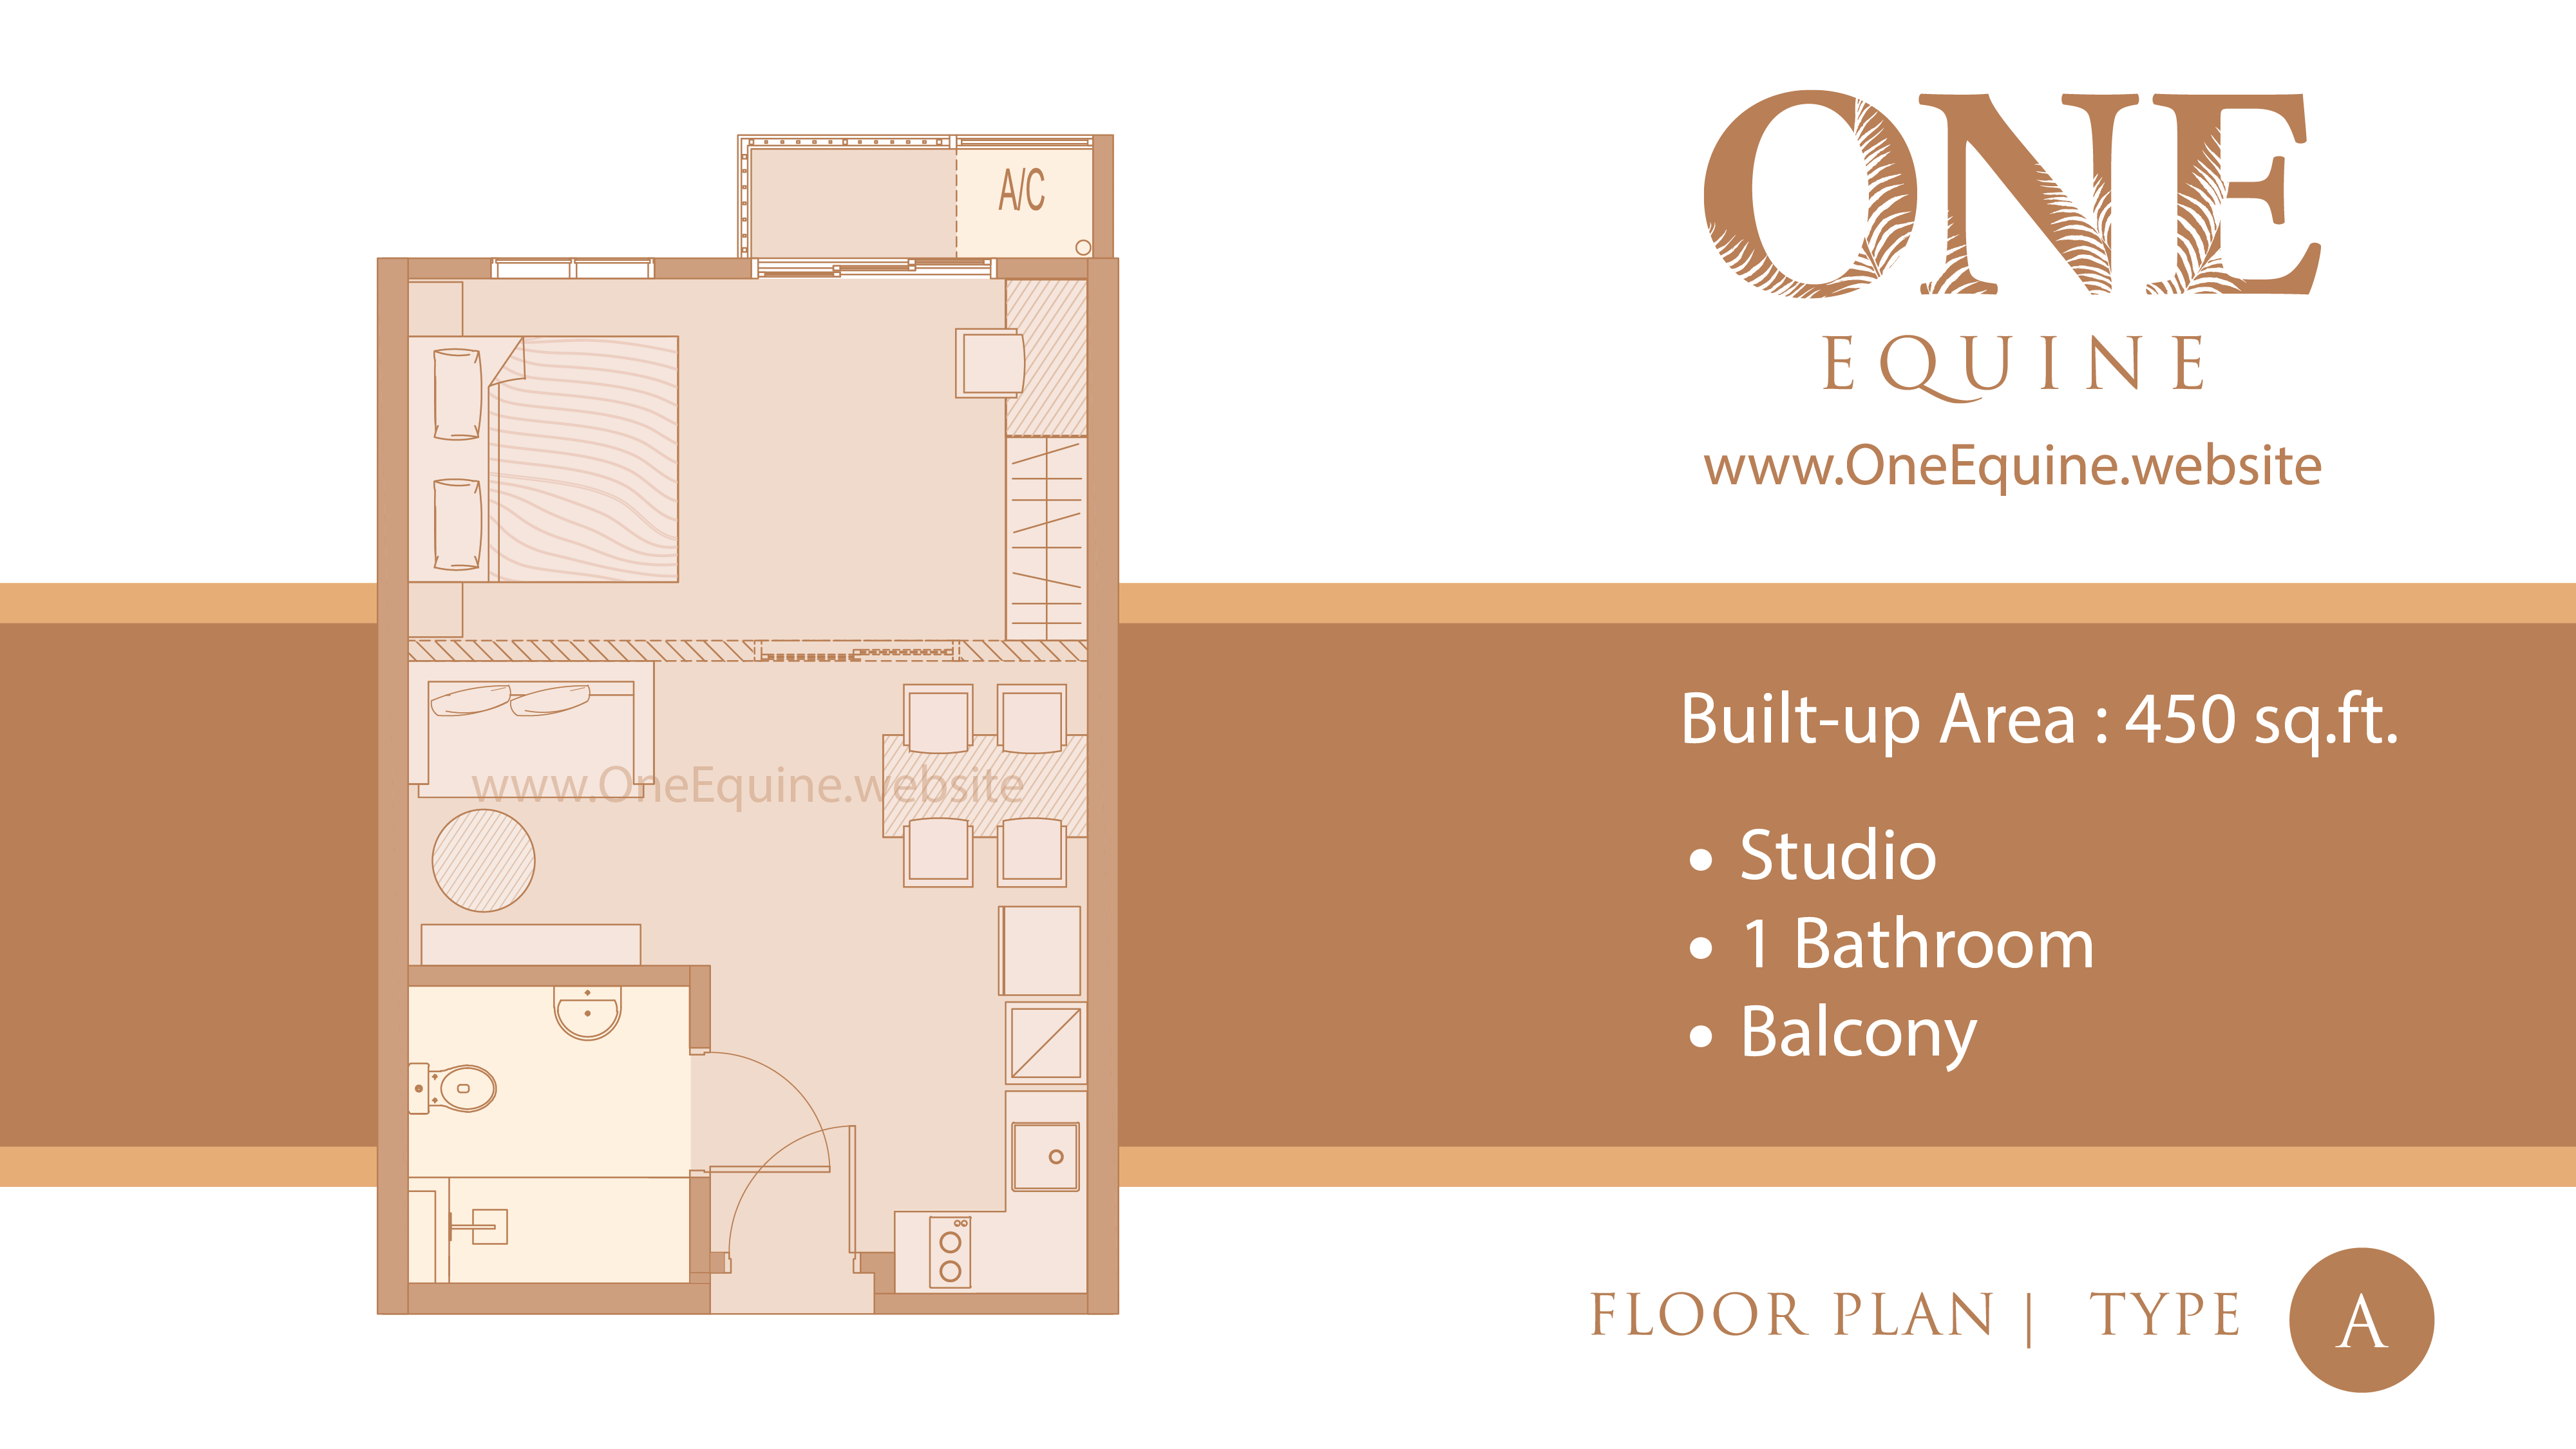 One Equine Park Seri Kembangan - SOHO Studio 1 Bathroom Balcony - Floor Plan Type A - 450 sqft